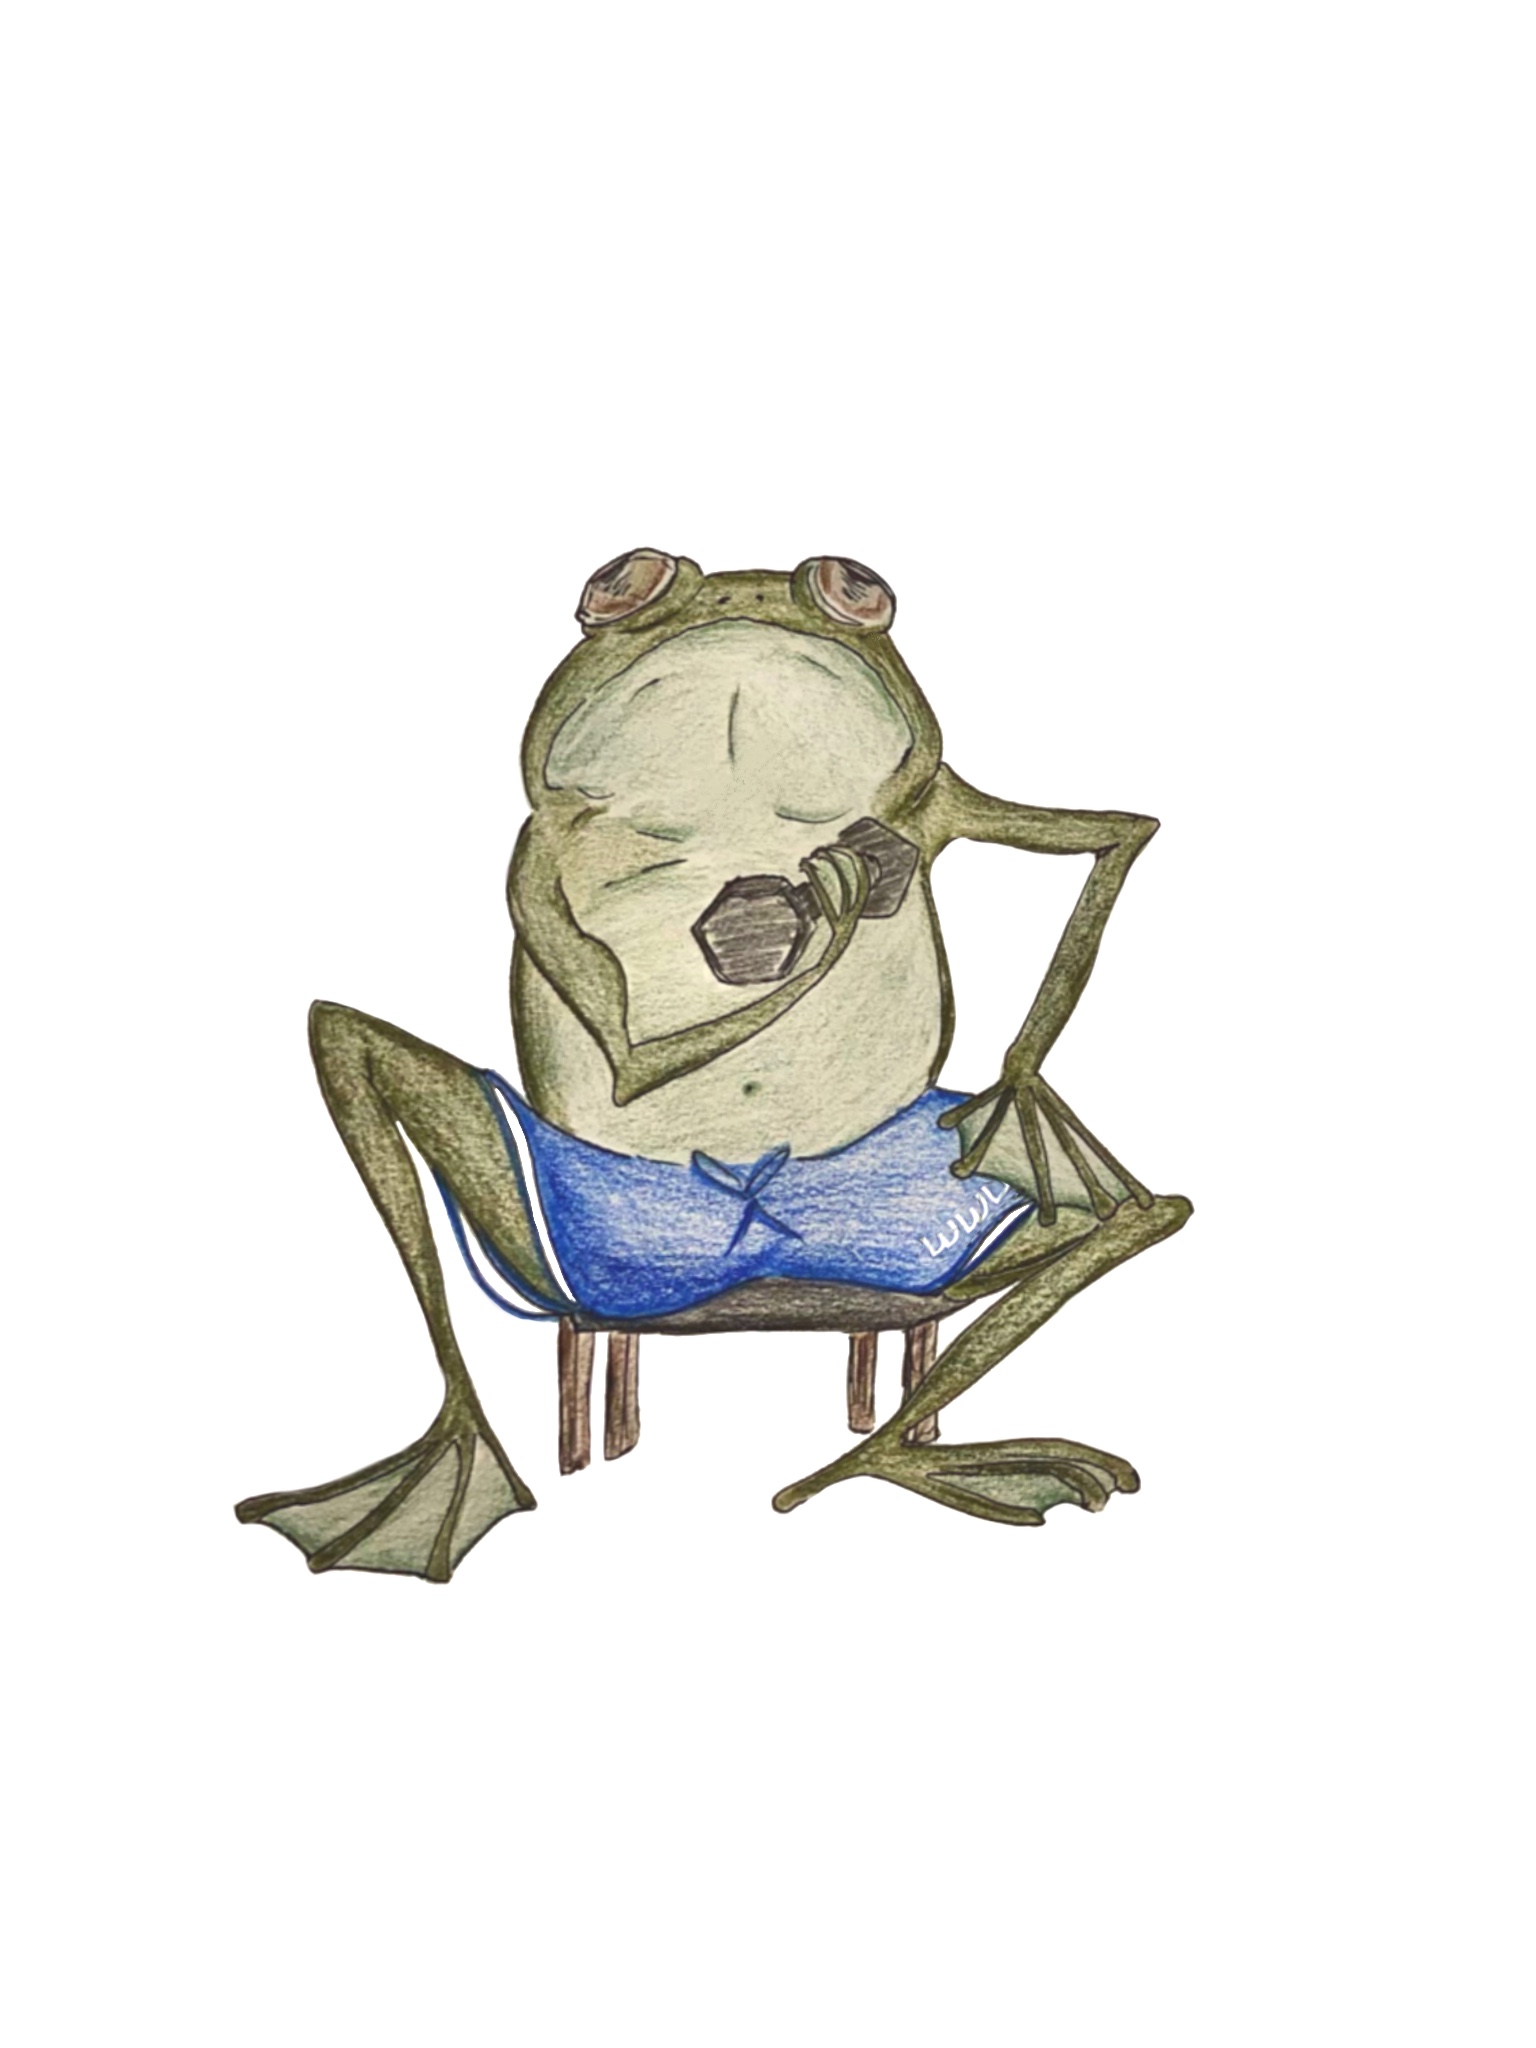 illustration depicting a bullfrog doing bicep arm curls